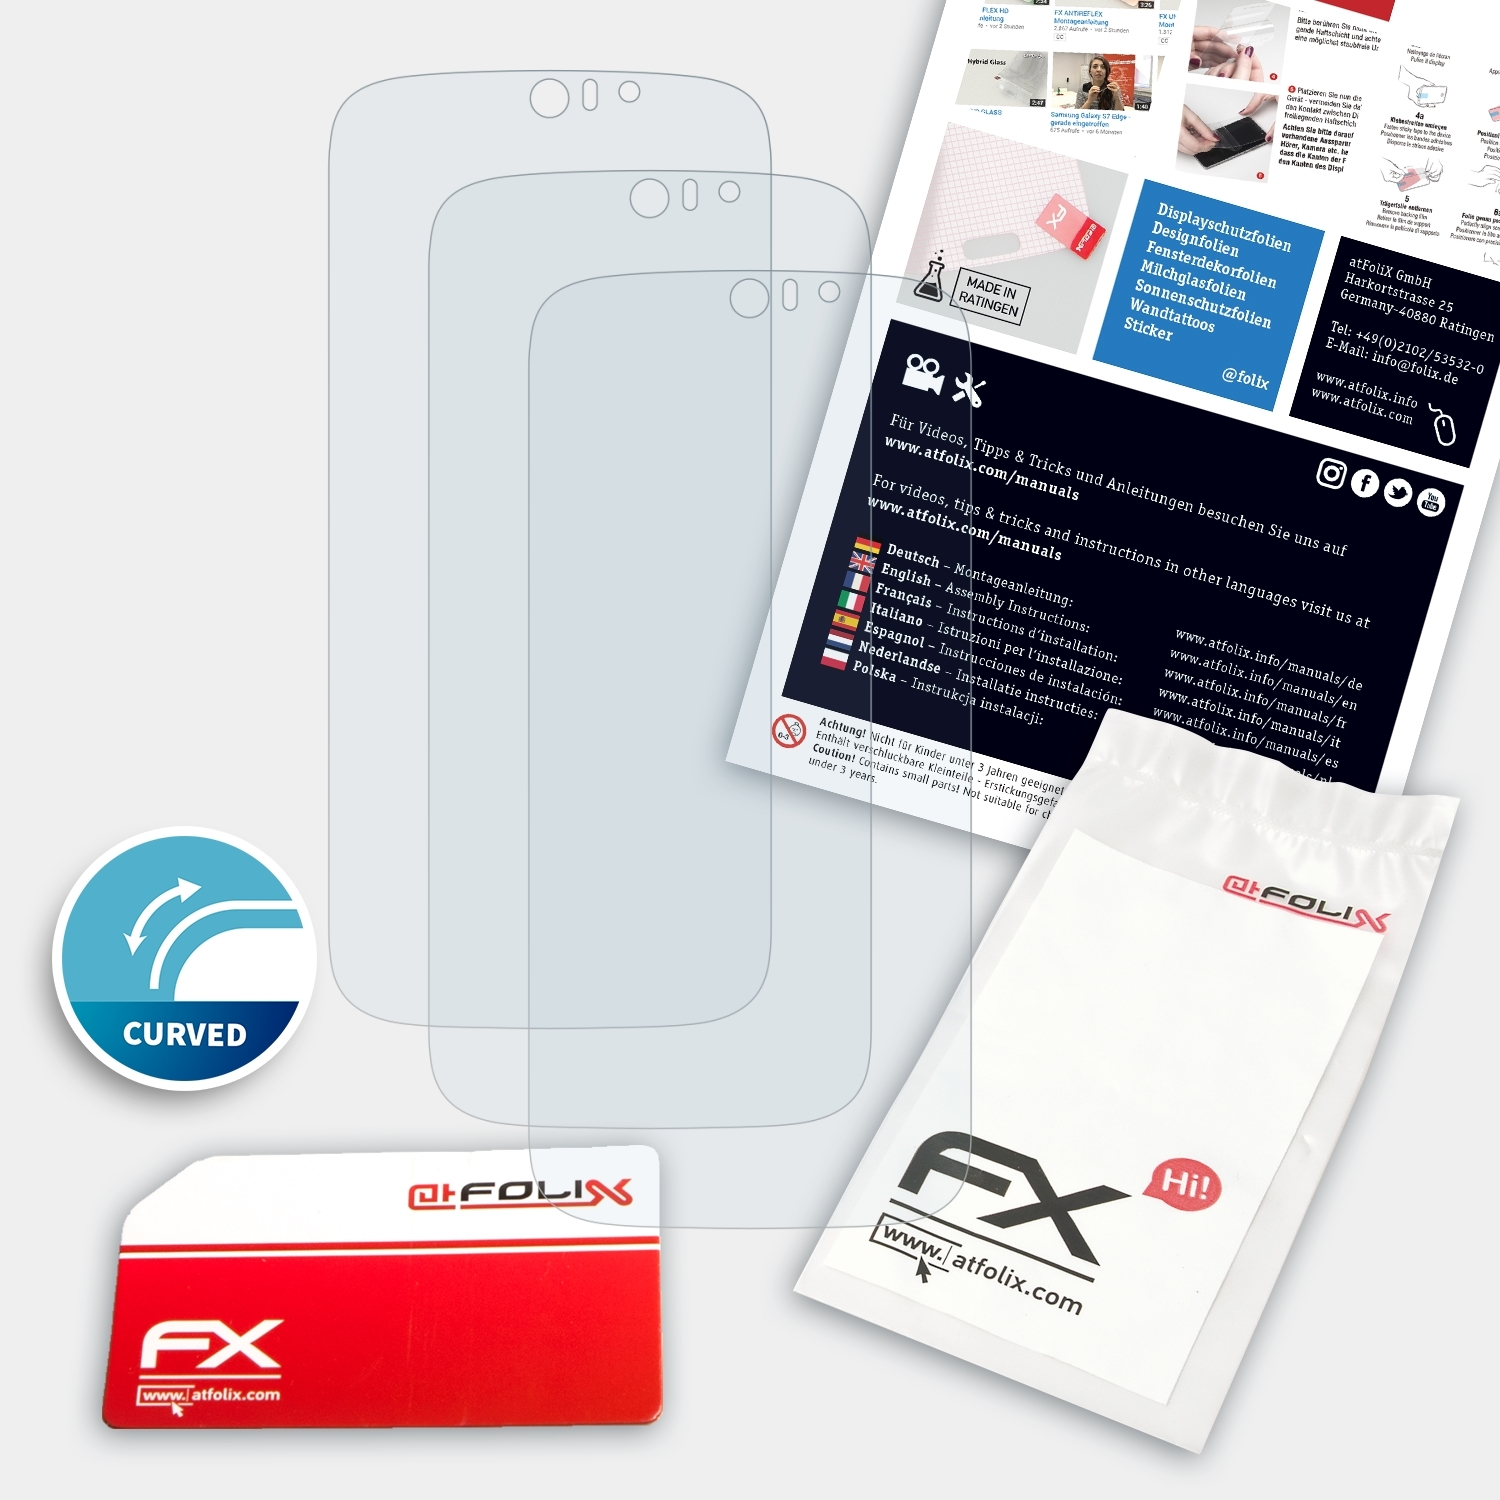 ATFOLIX 3x Liquid Acer FX-ActiFleX Displayschutz(für S) Jade